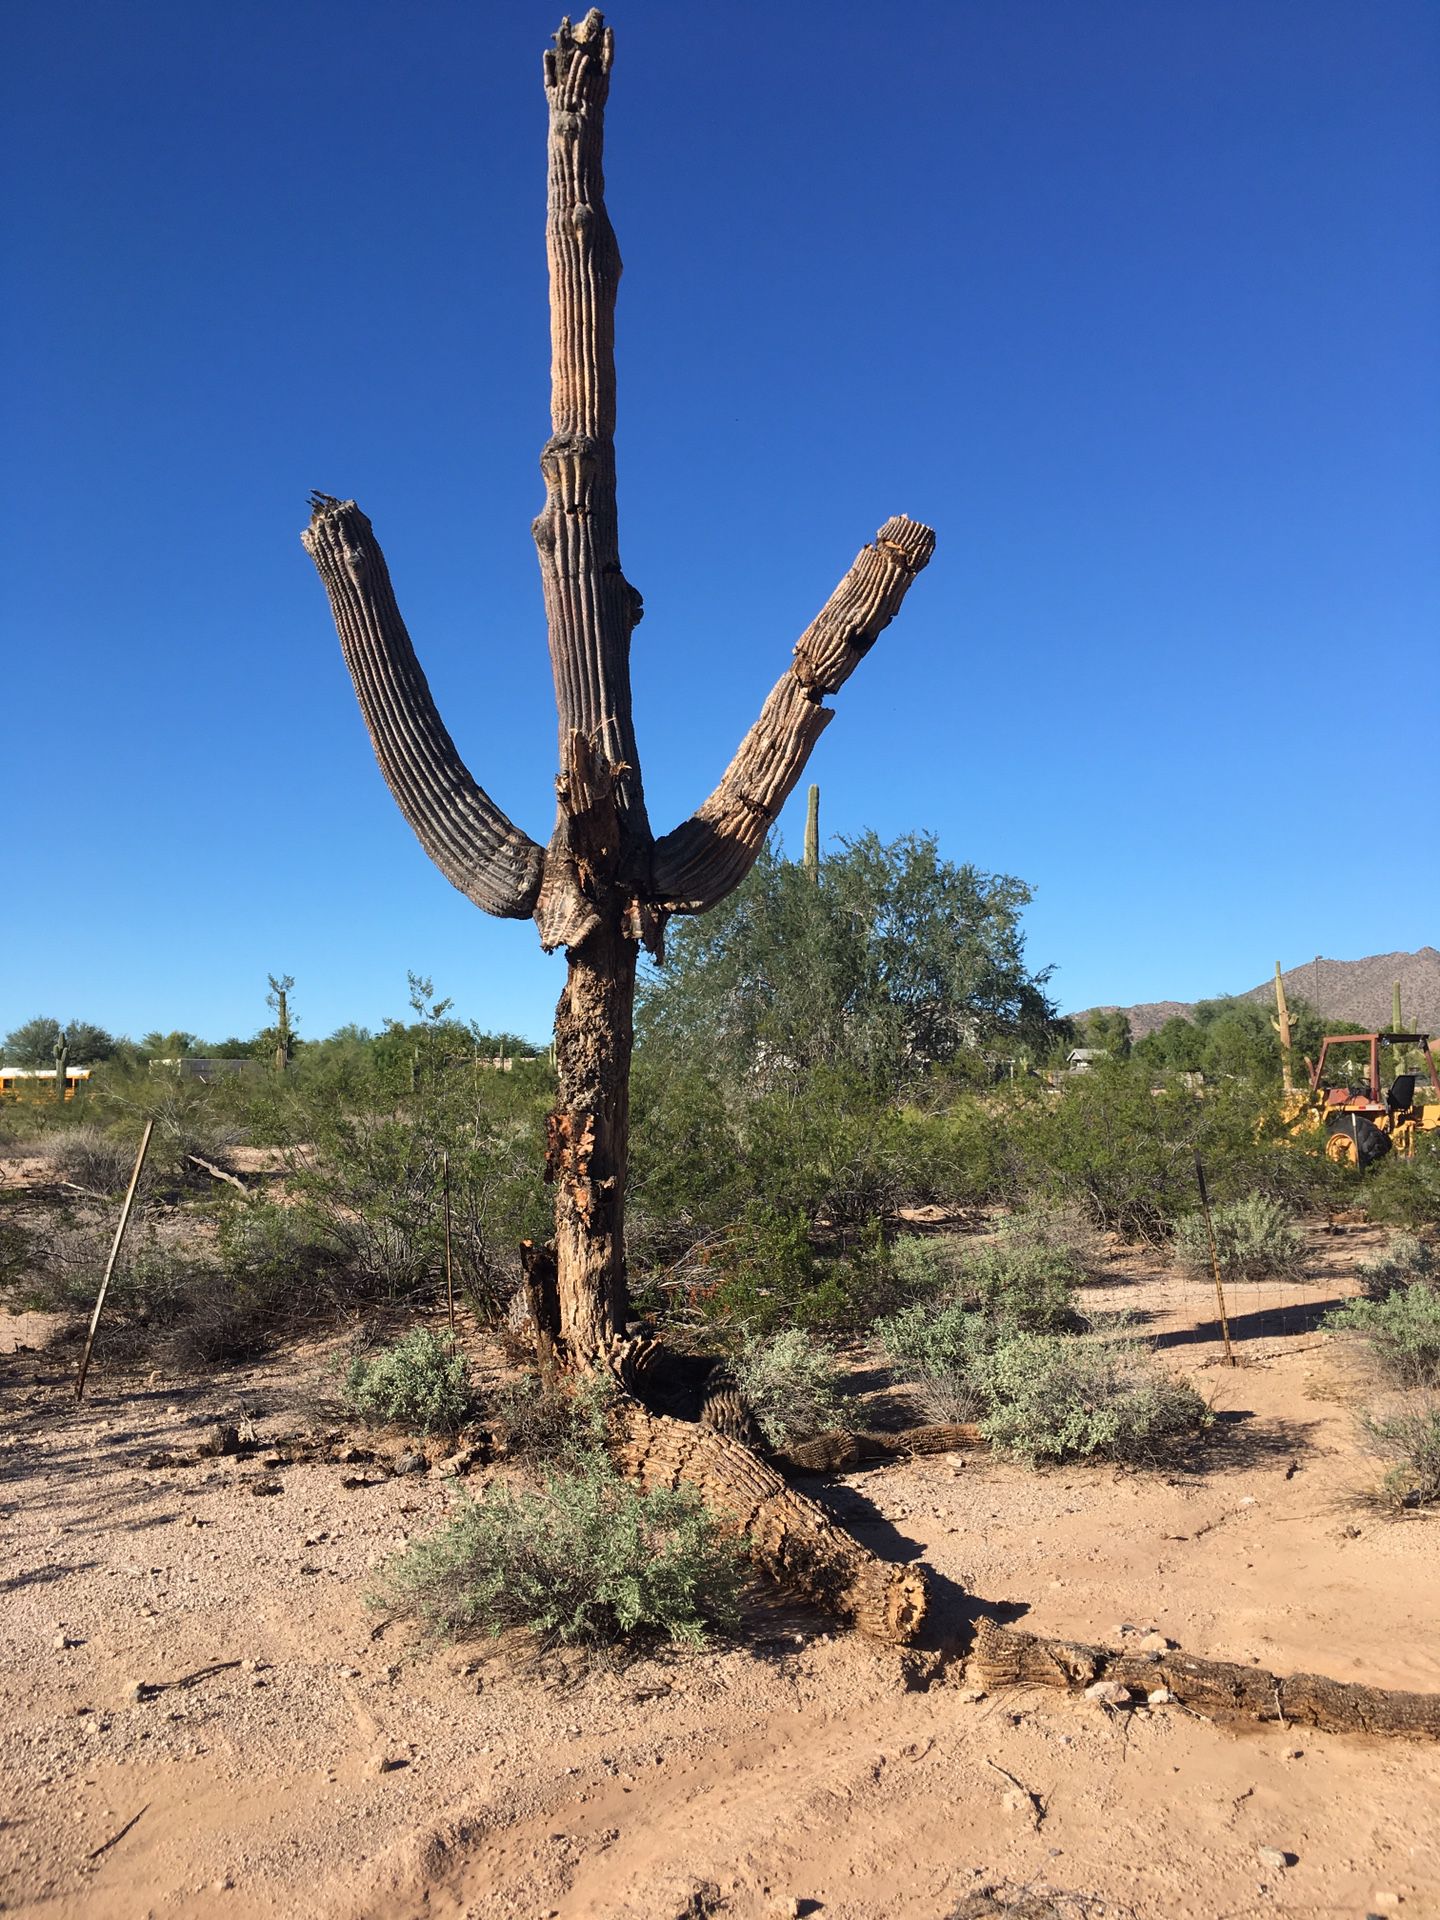 Saguaro cactus skeletons